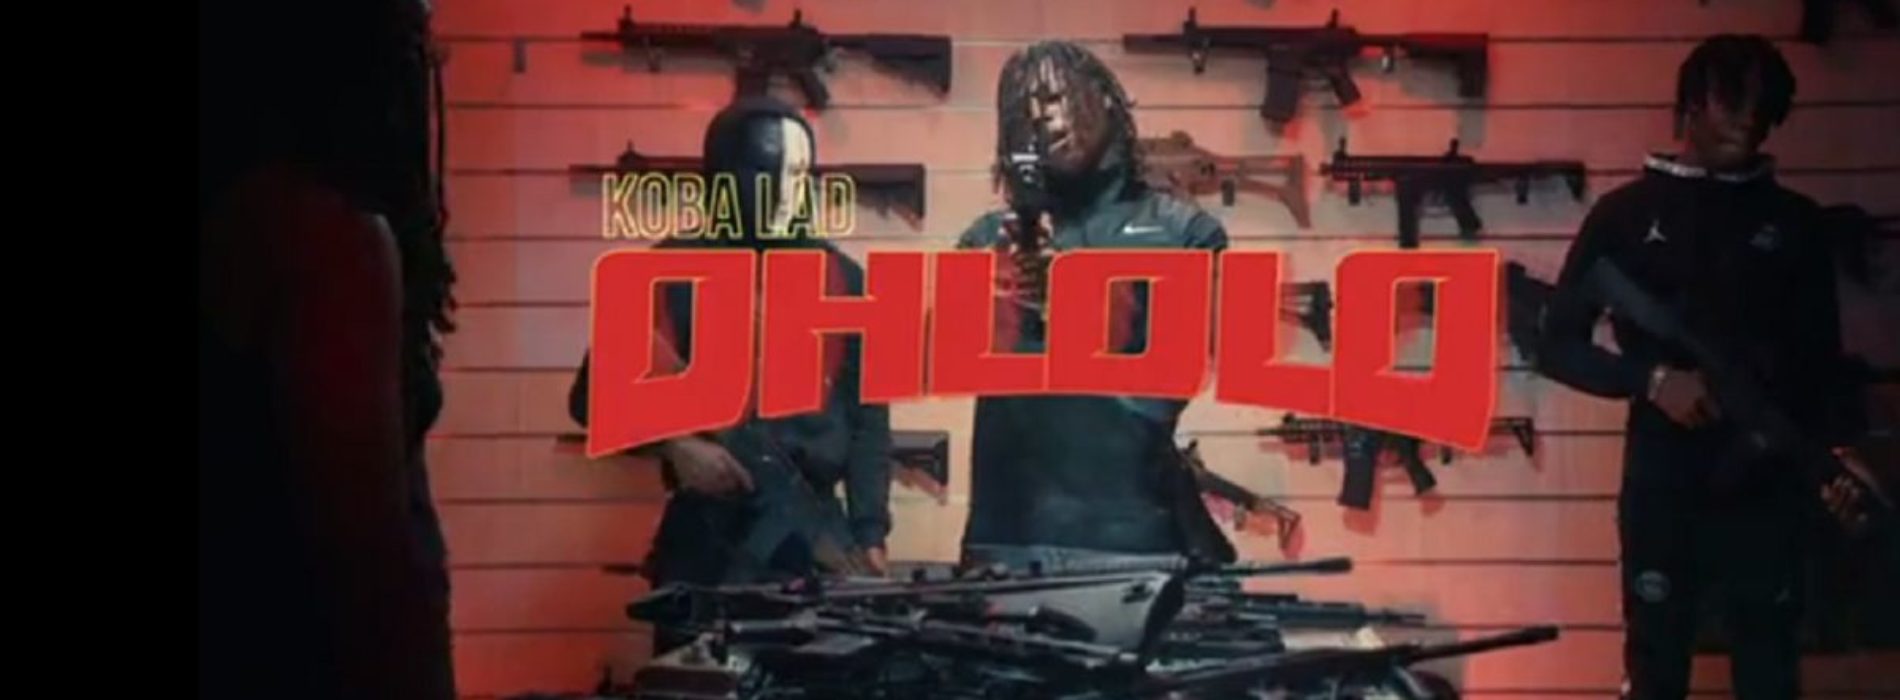 Koba LaD – Ohlolo (Clip officiel) – Août 2020